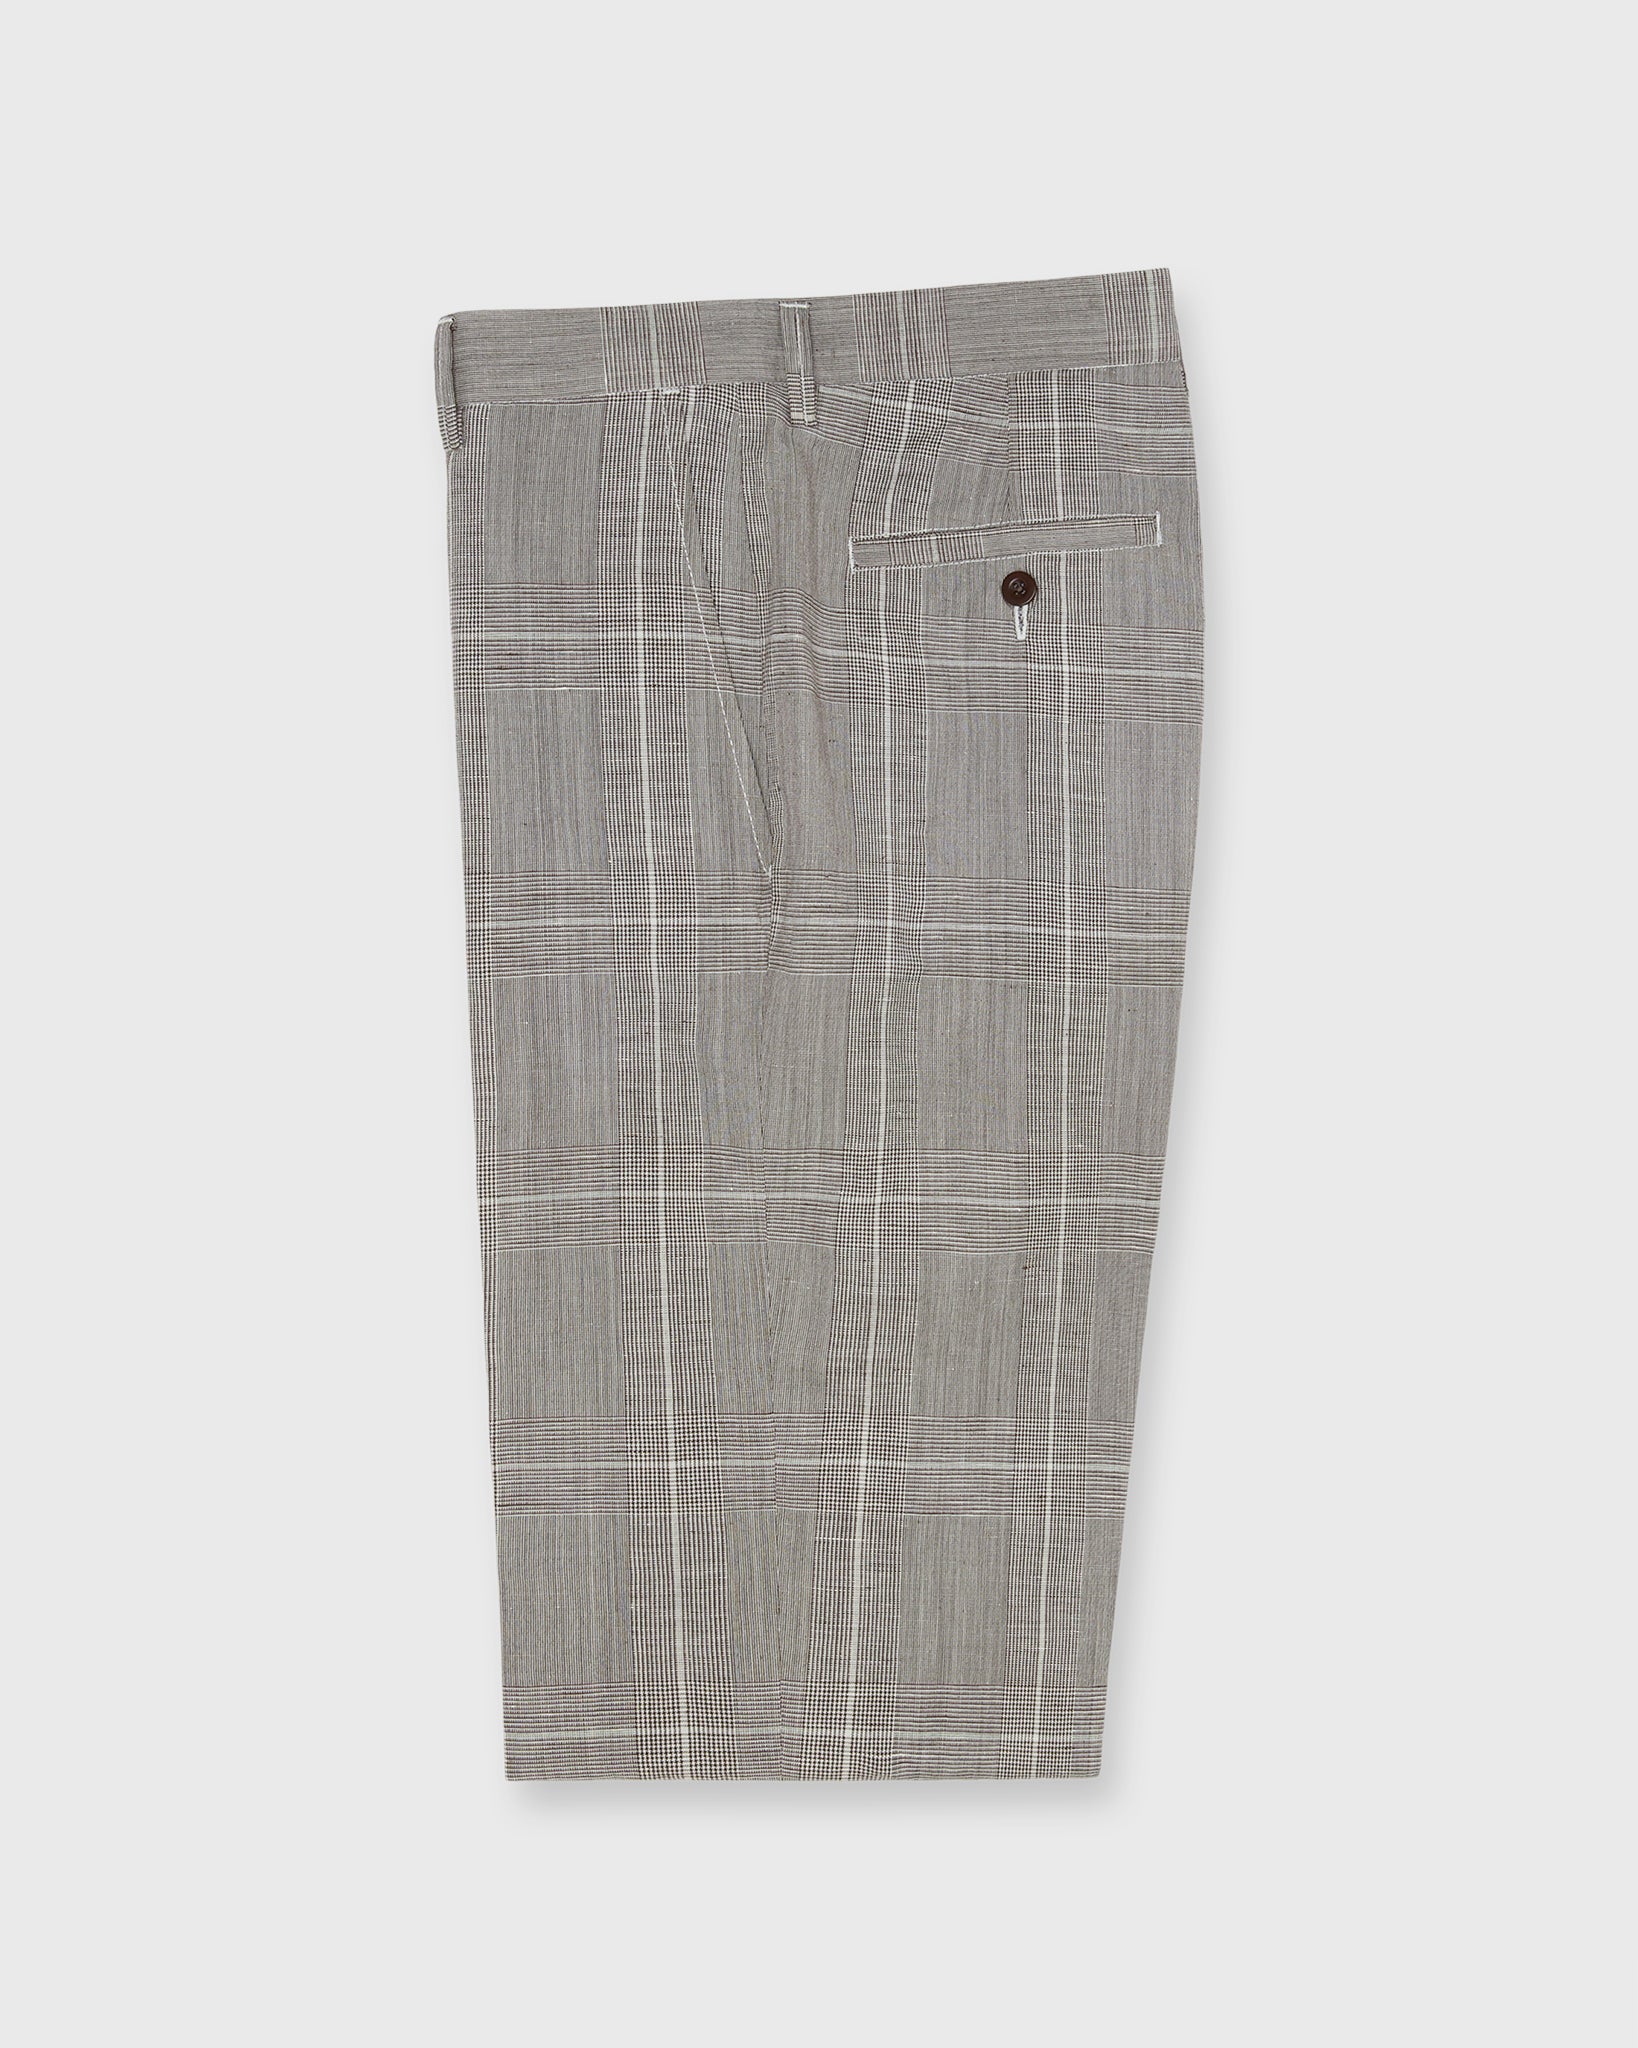 Field Trouser in Flax/Chocolate Glen Plaid Plainweave